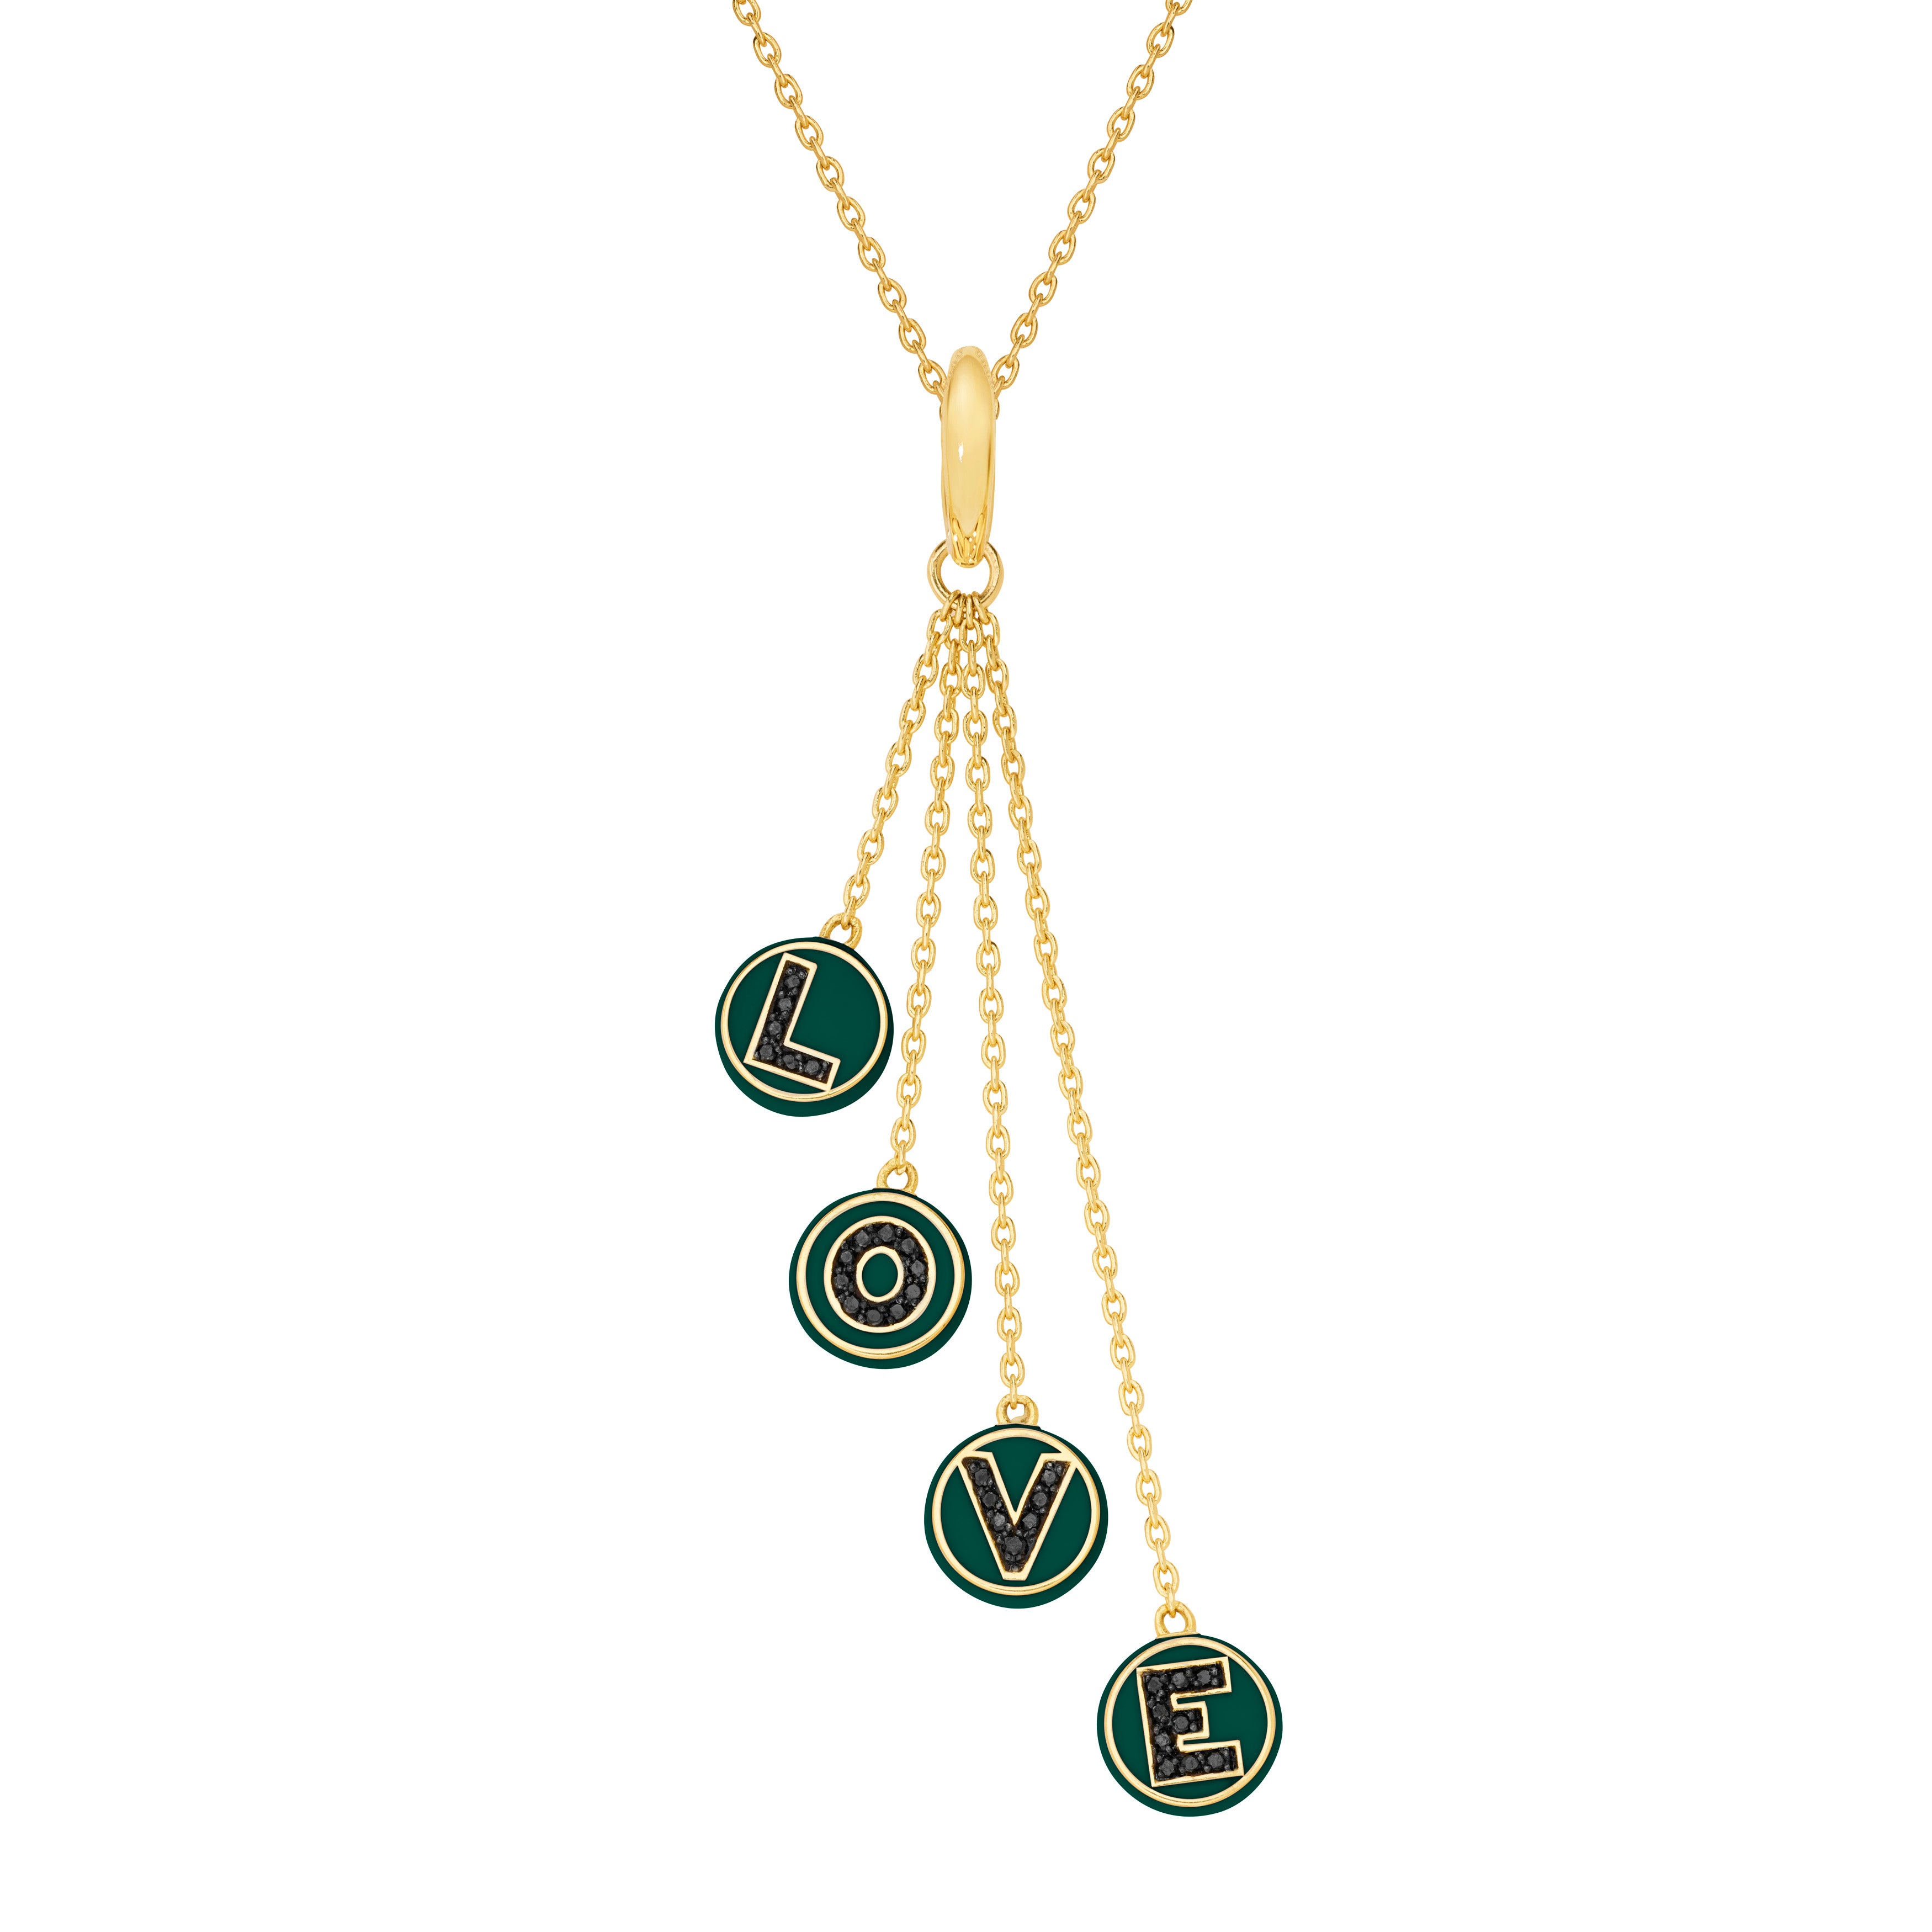 LOVE Beads Pendant in Green